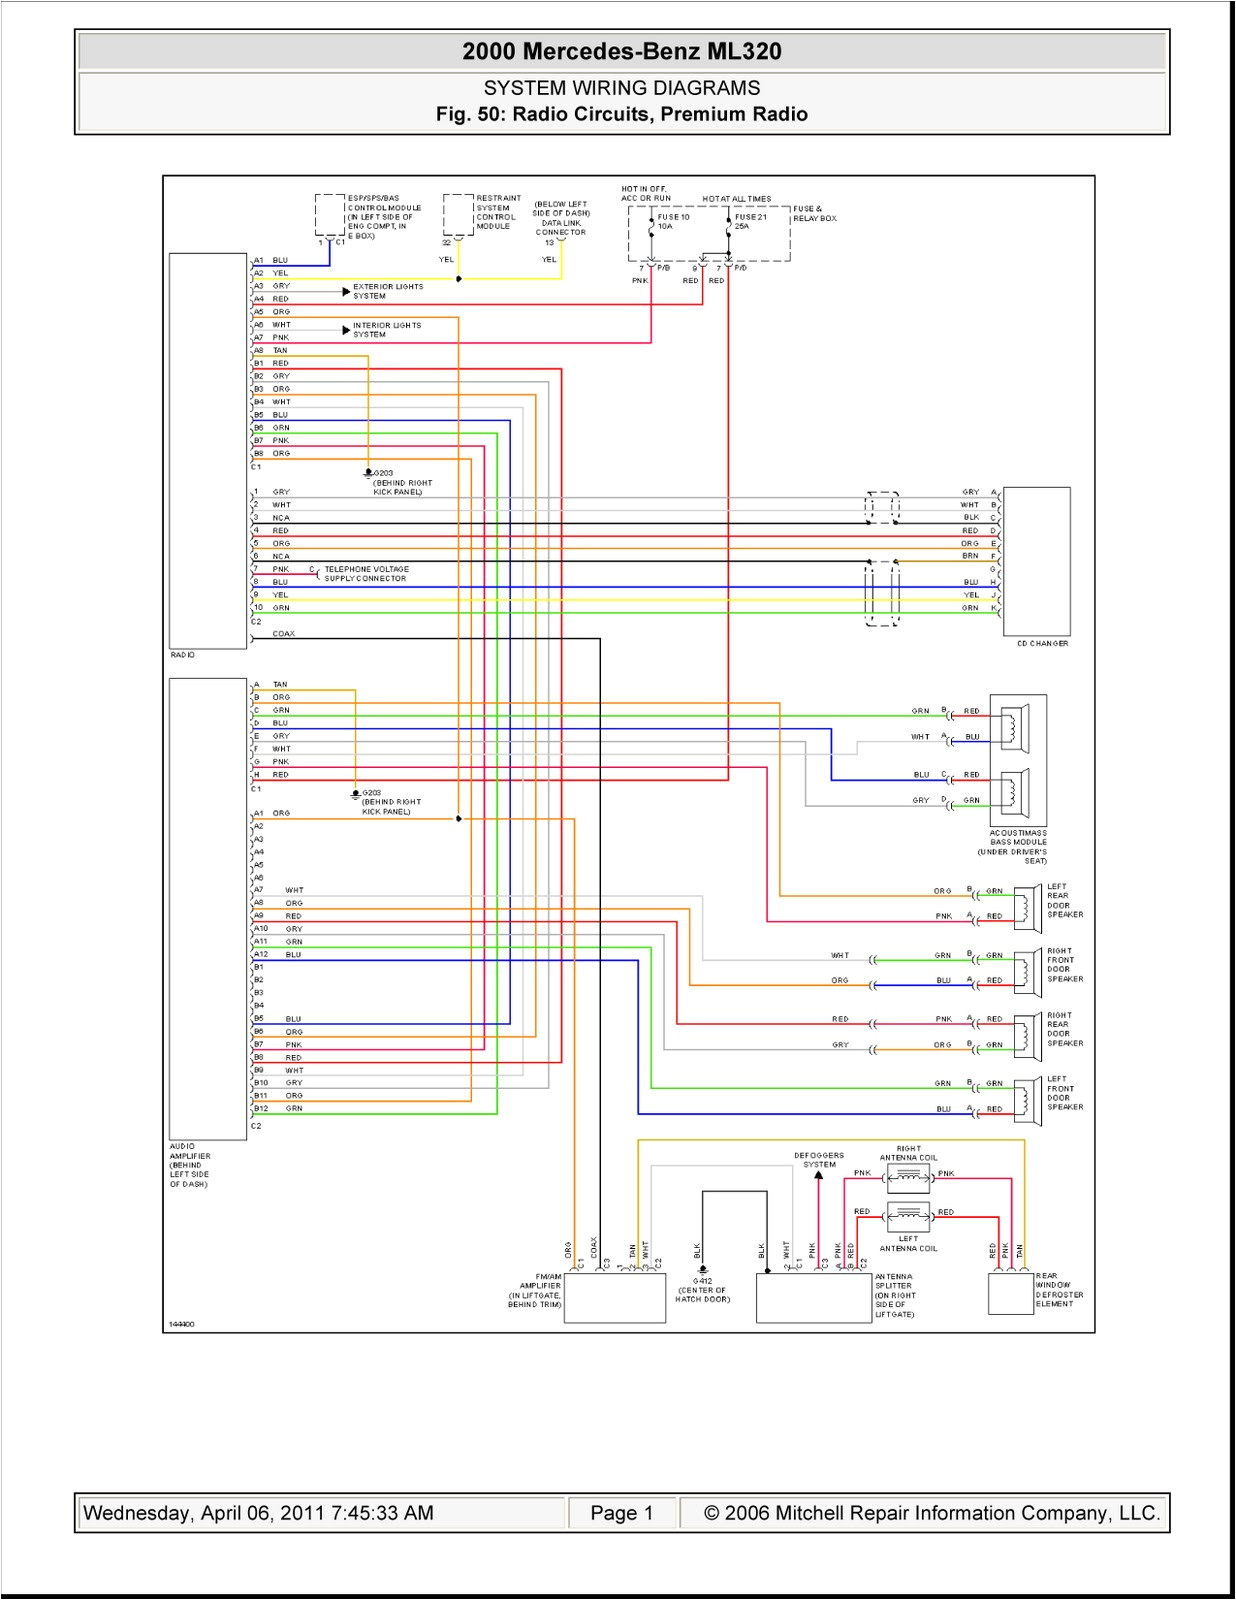 2000 c230 wiring diagram wiring diagram blog mercedes benz c230 radio wiring diagram mercedes c230 radio wiring diagram